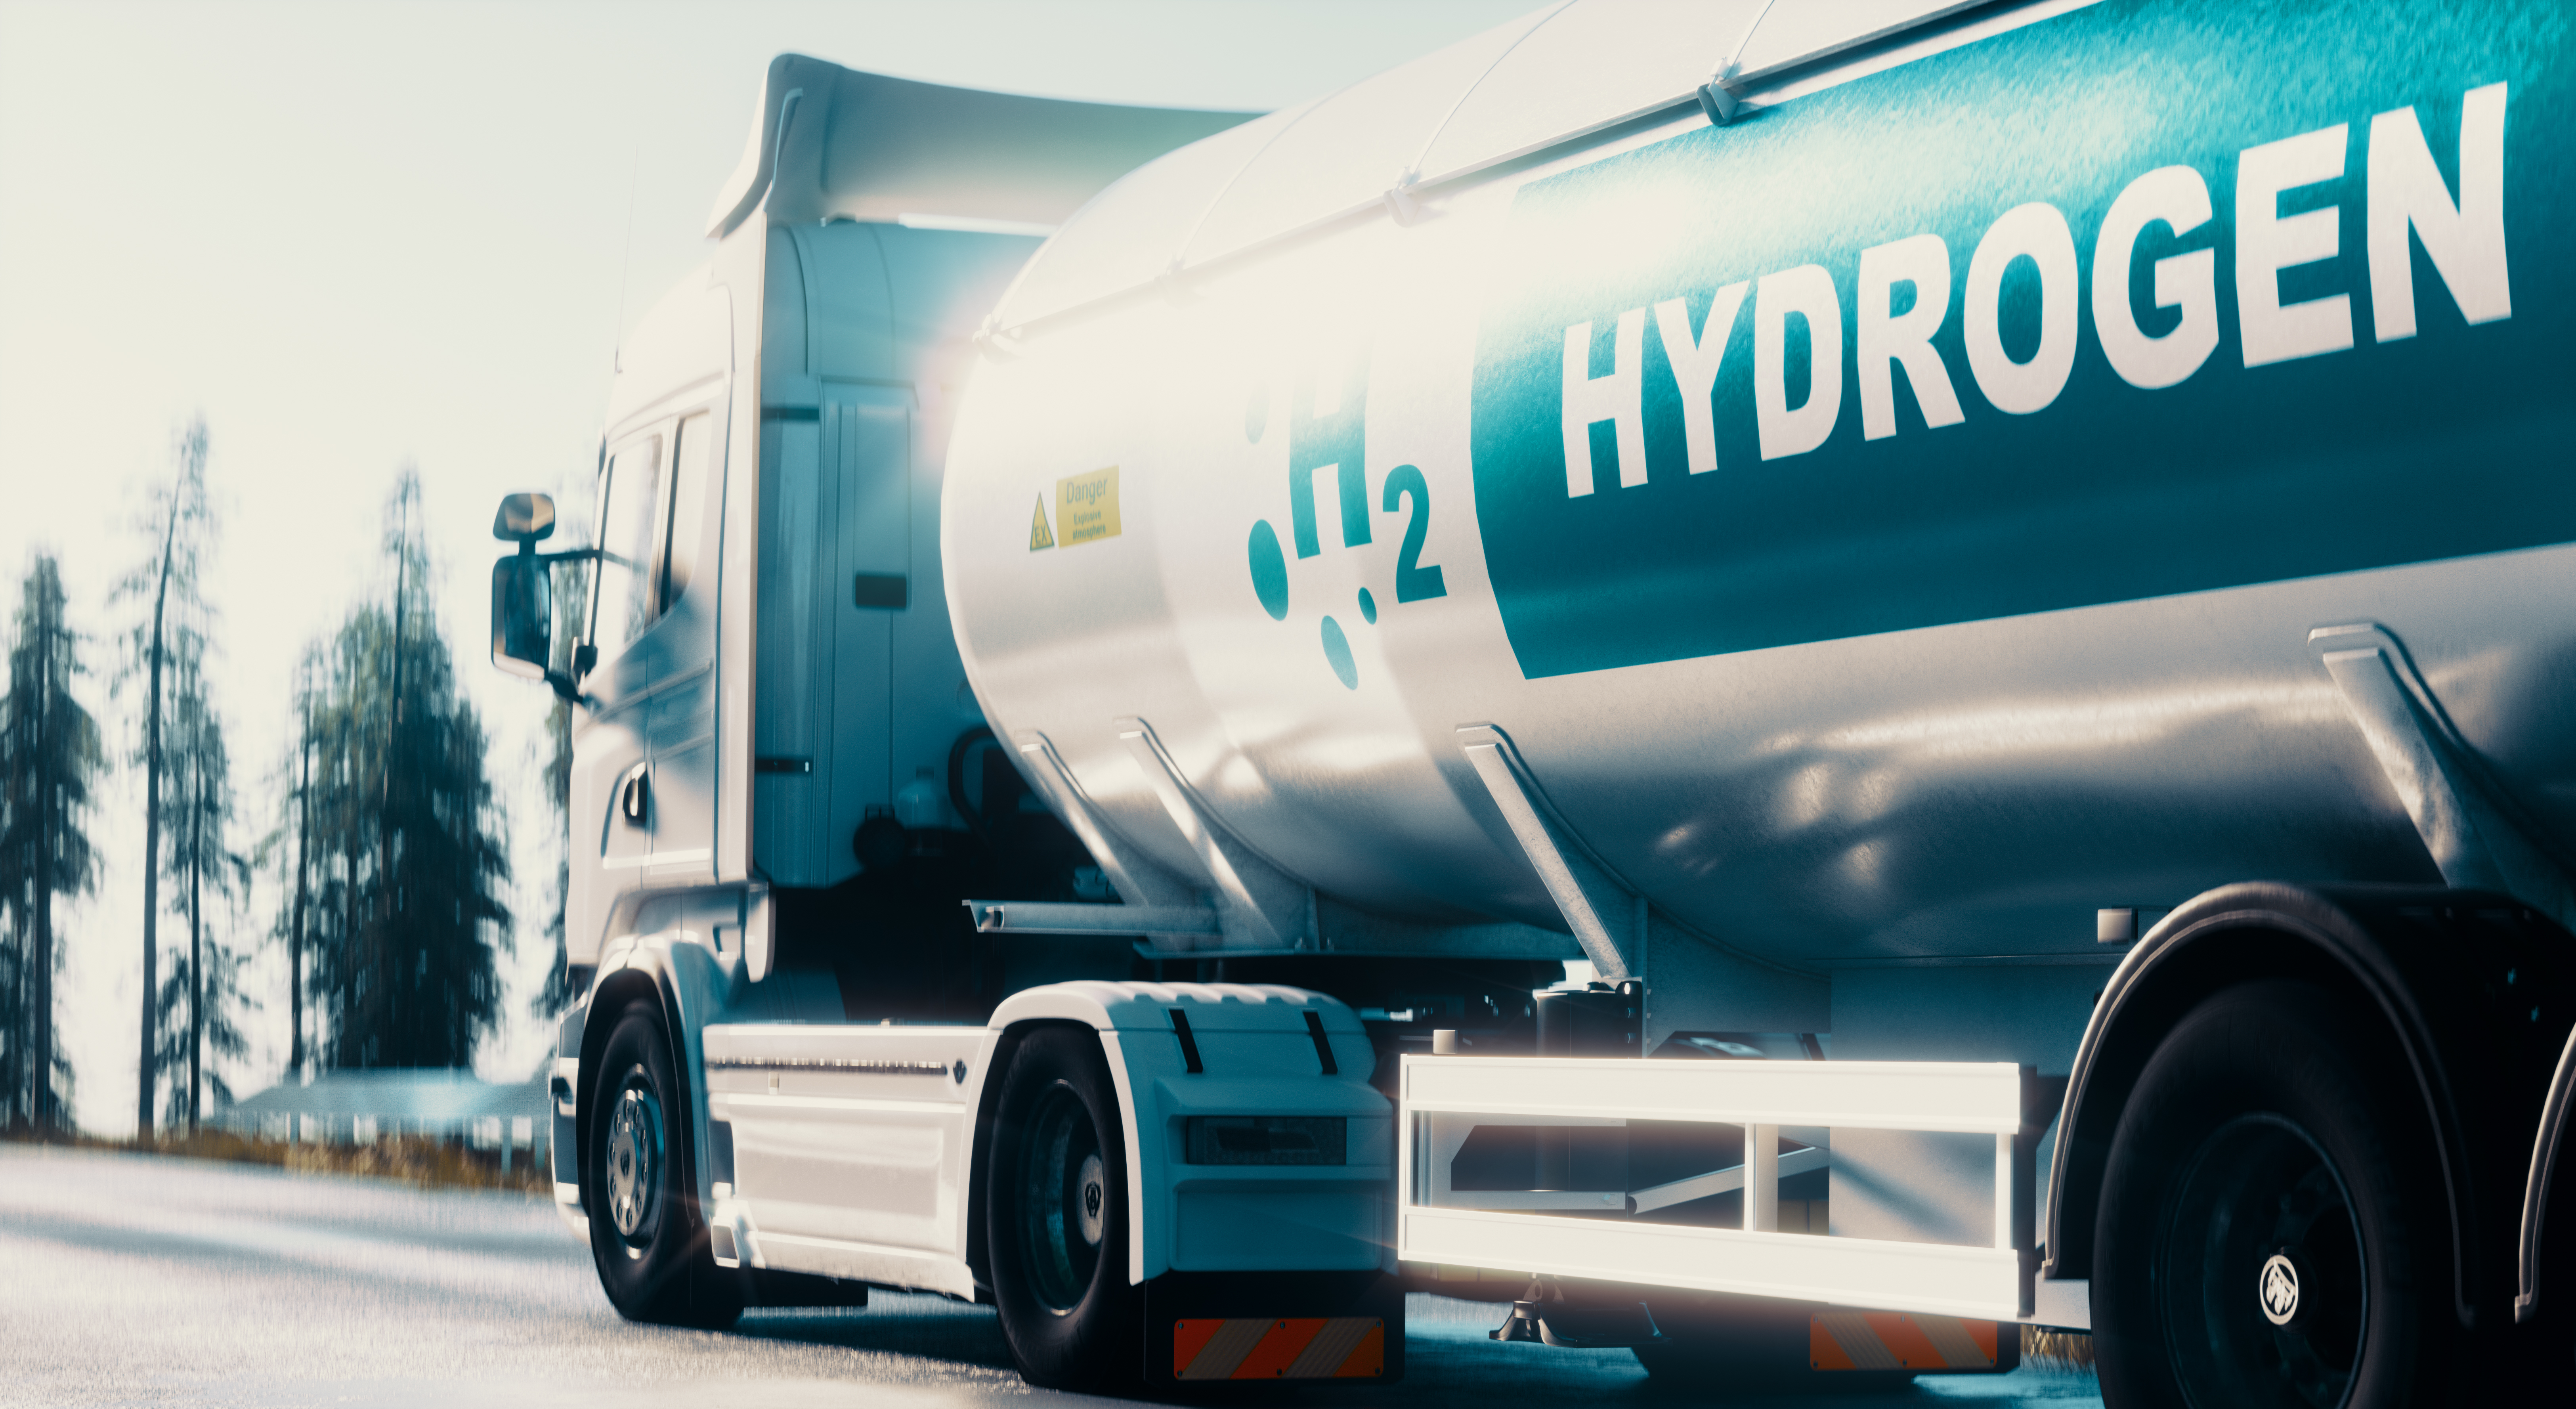 Truck transporting H2 (hydrogen)